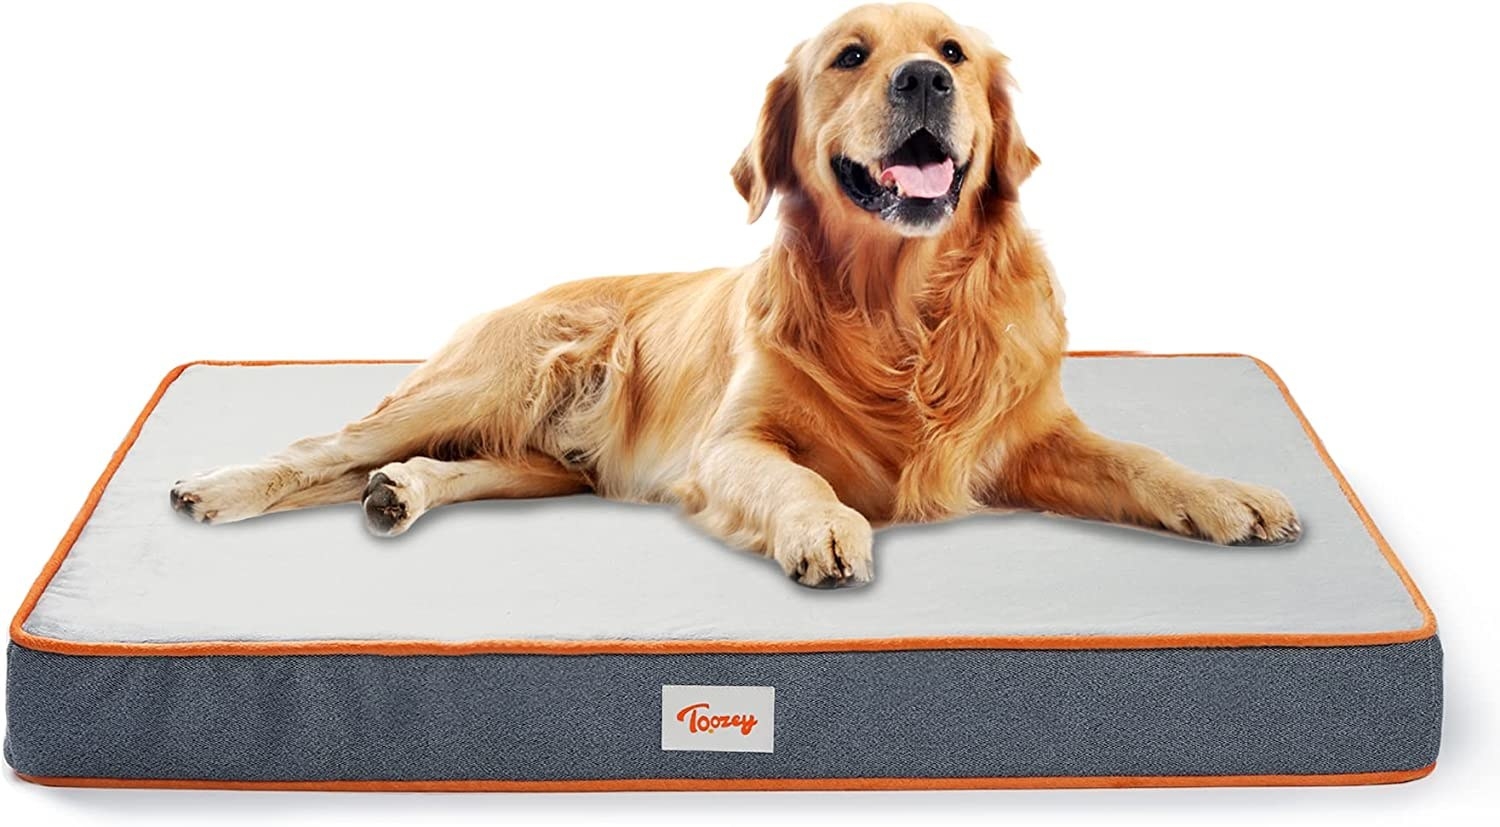 a golden retriever on a dog bed